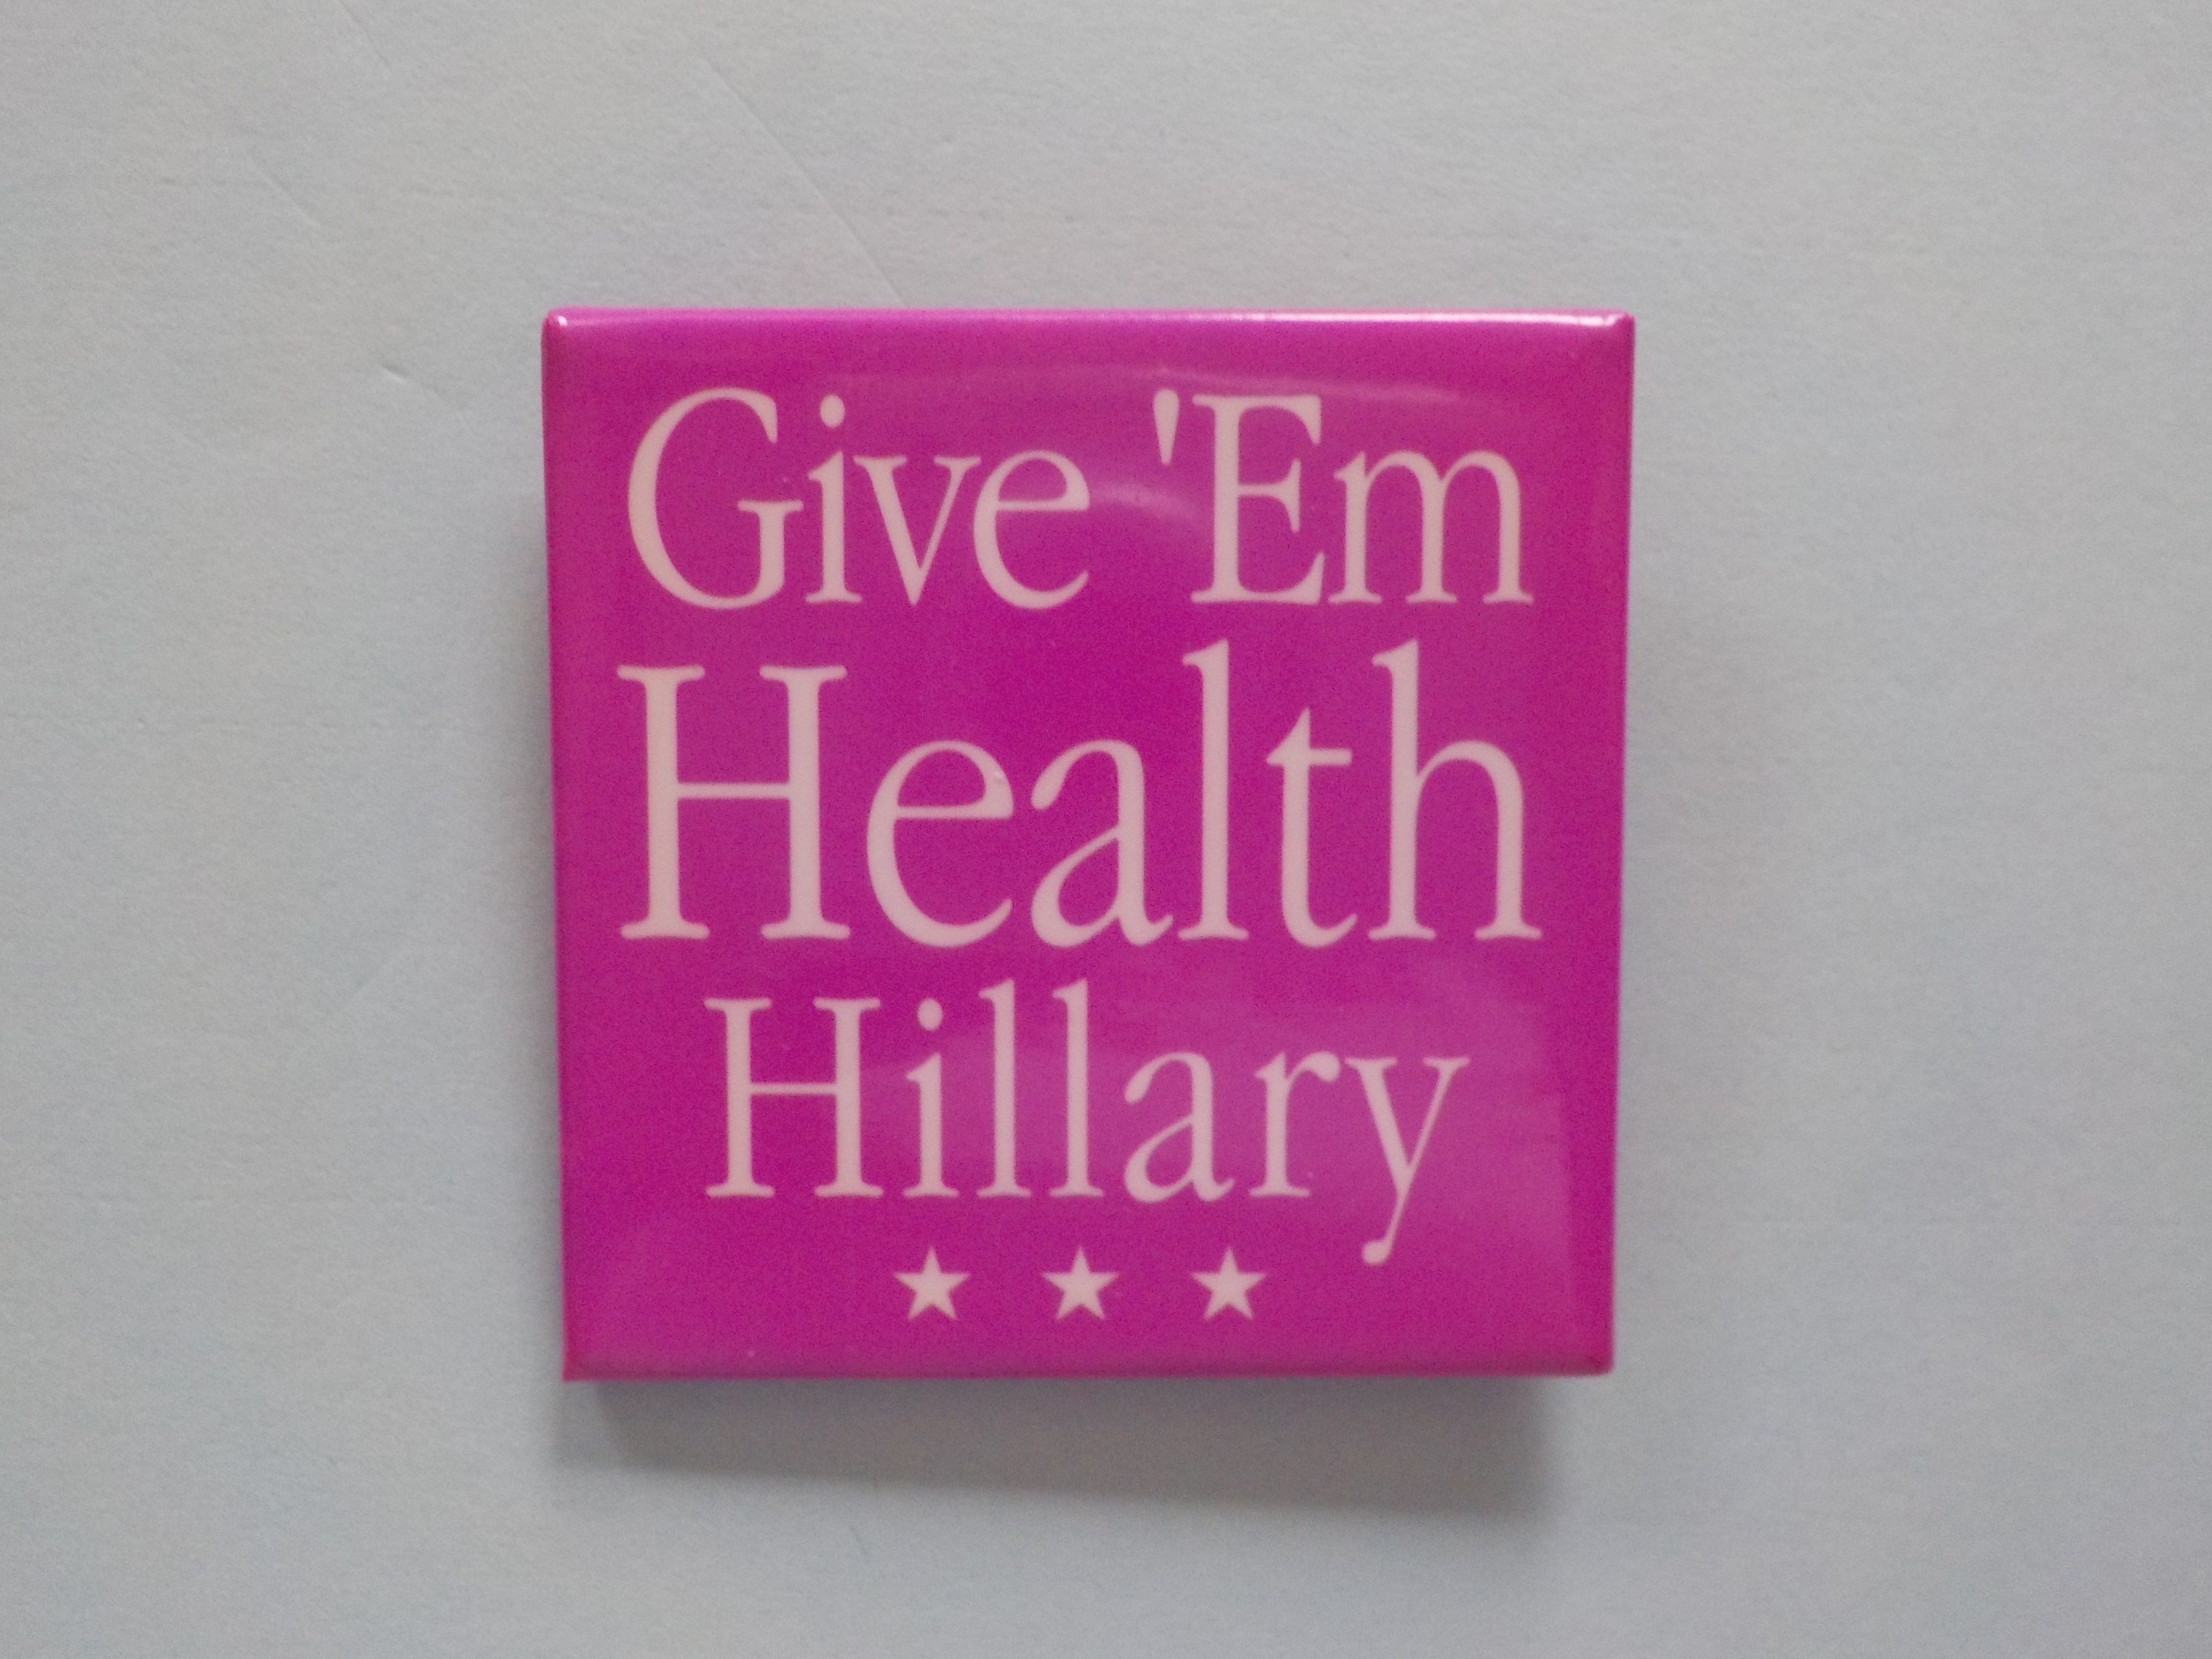 Health Hillary